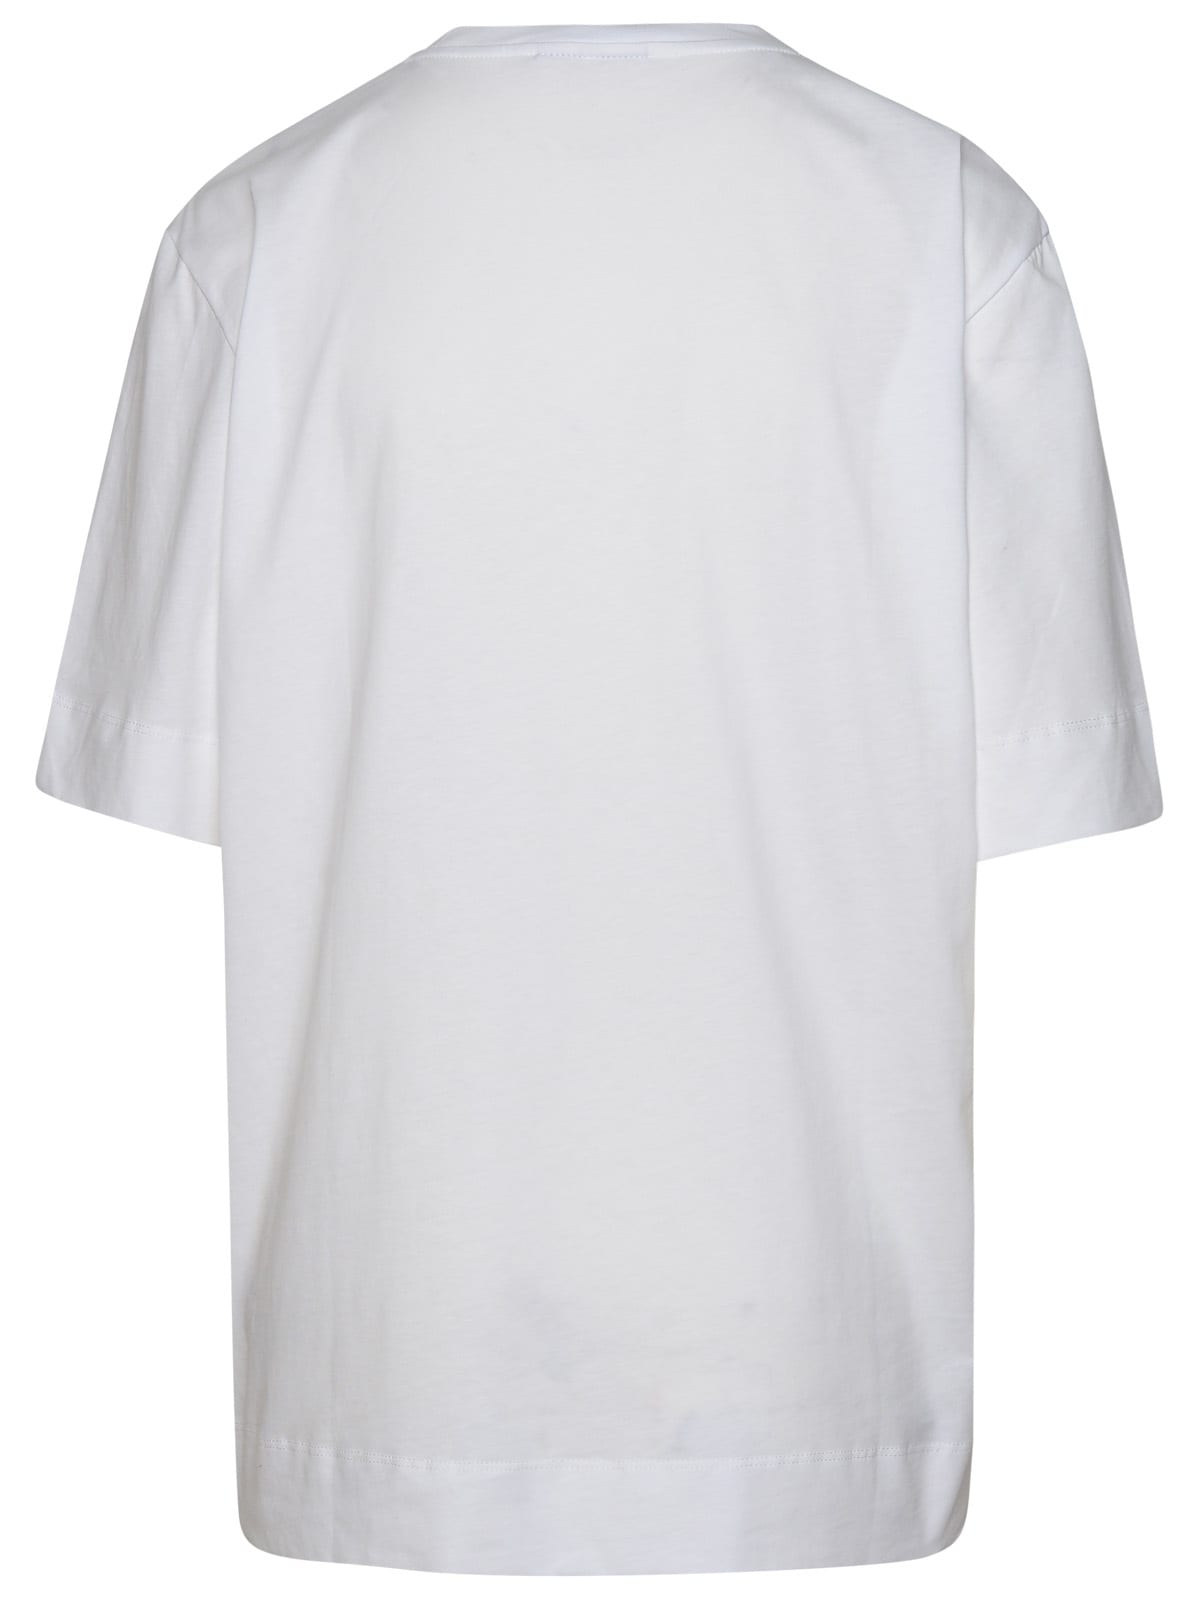 Shop Ganni White Organic Cotton T-shirt